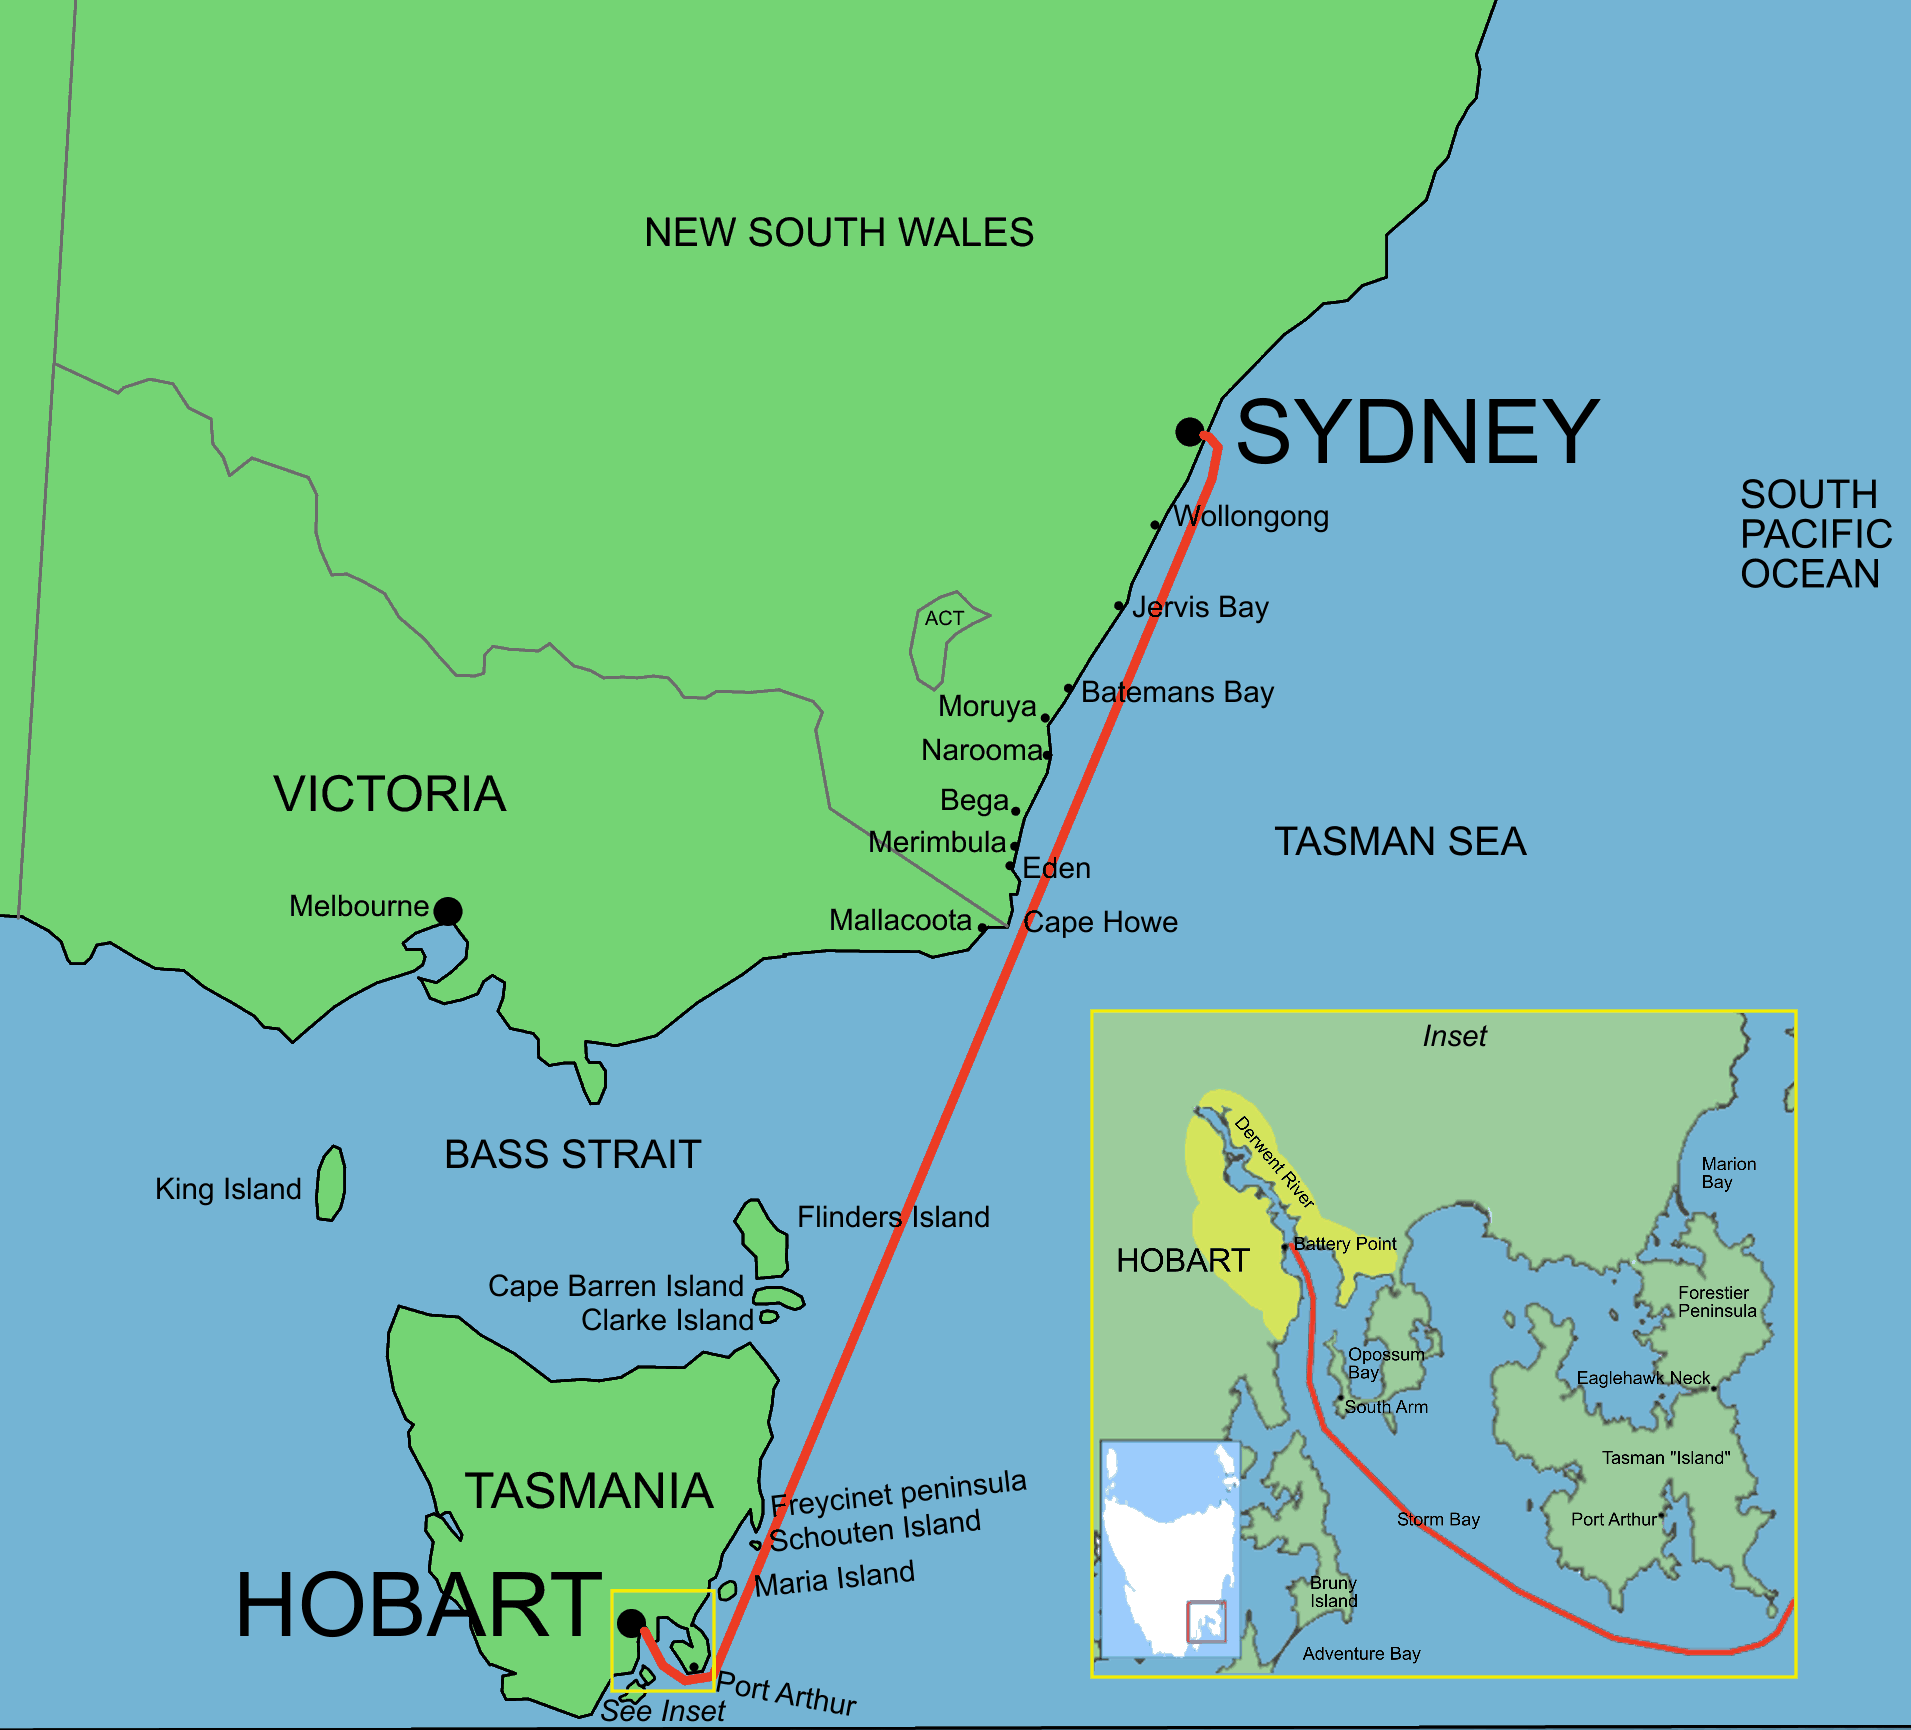 Sydney hobart race route5